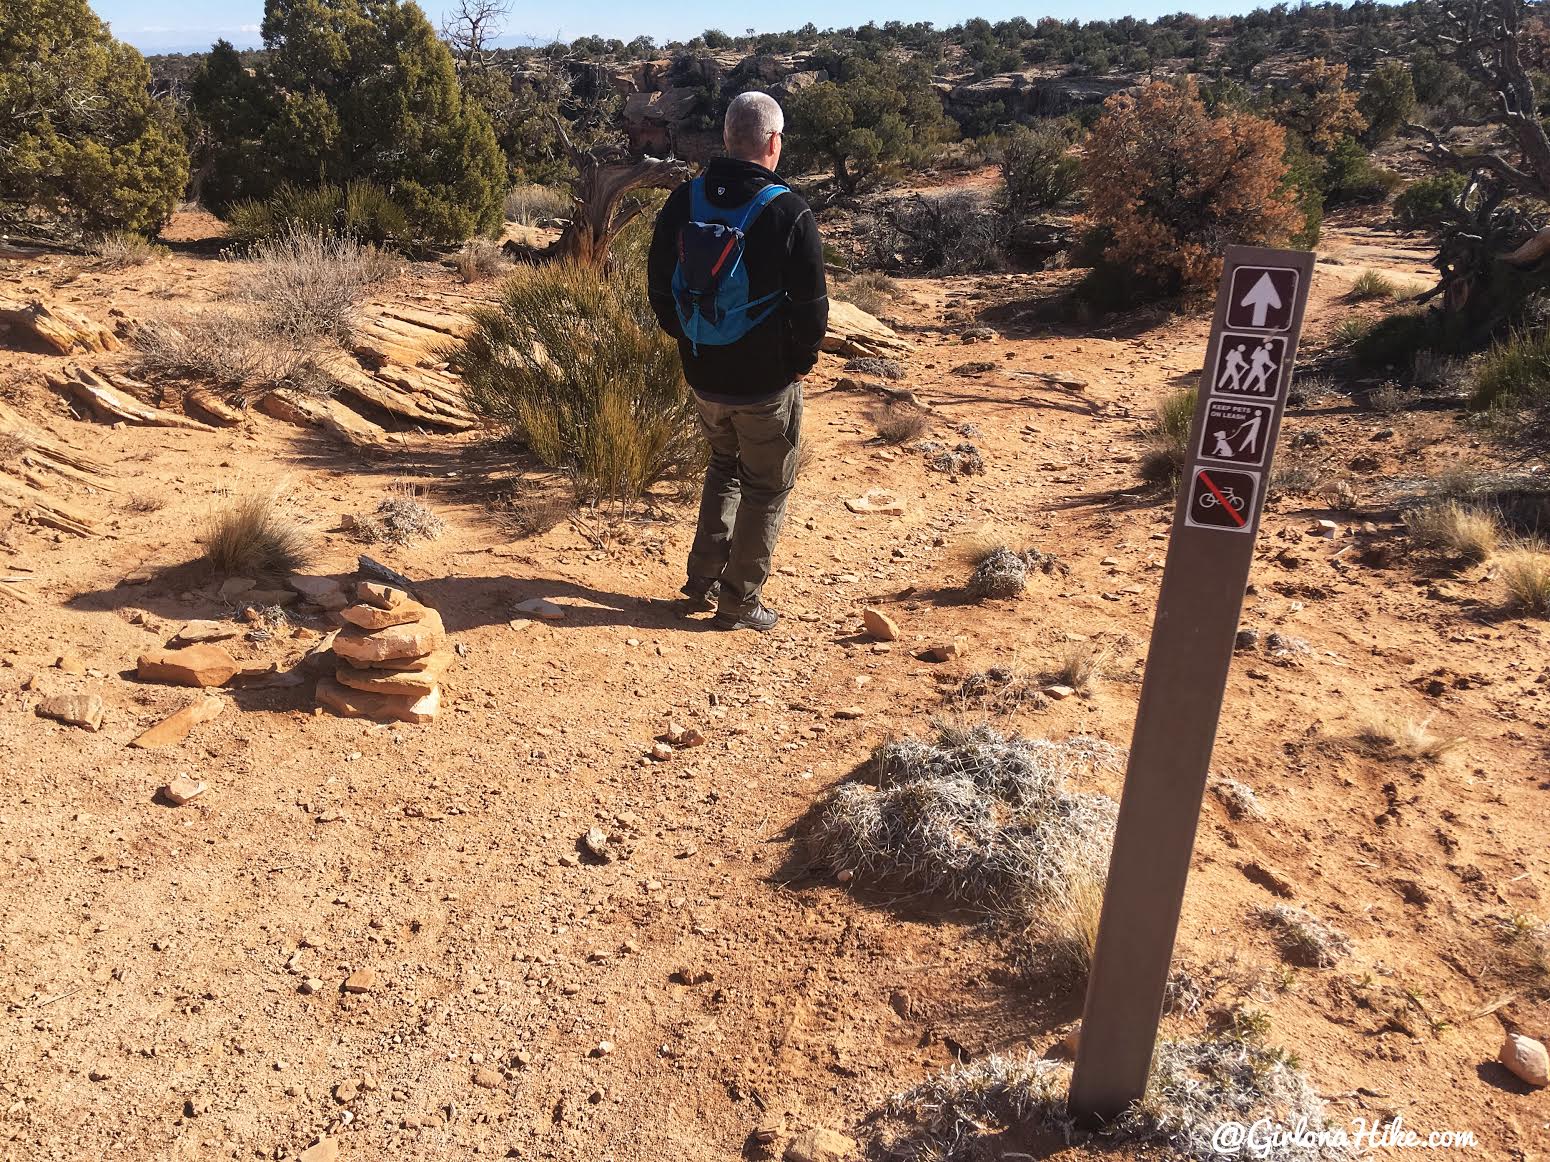 Hiking to The Citadel Ruins, Cedar Mesa, Ruins in Utah, Bears Ears National Monument